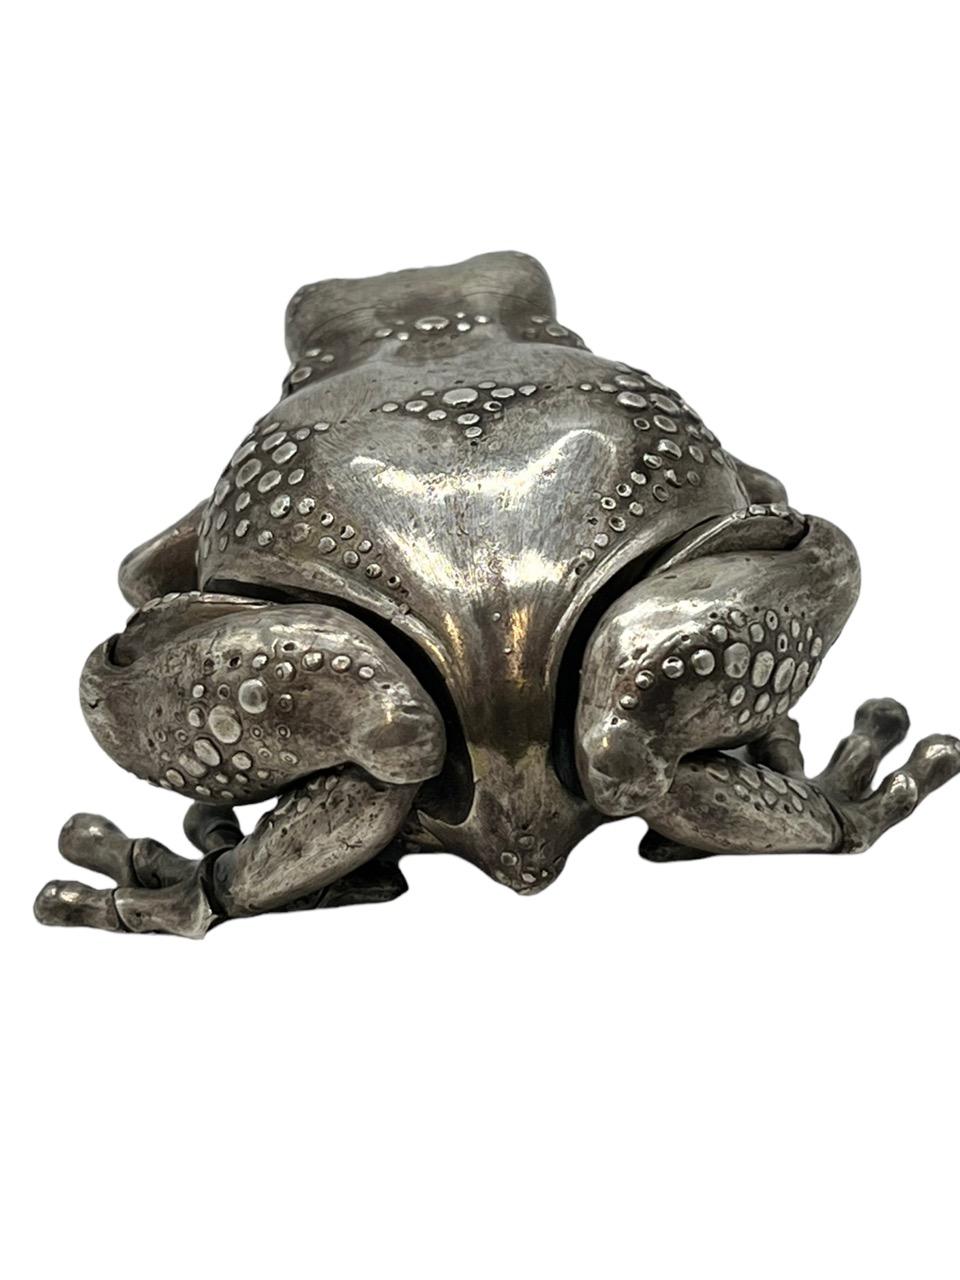 Oleg Konstantinov Fully Articulated Frog Made of Sterling Silver For Sale 1